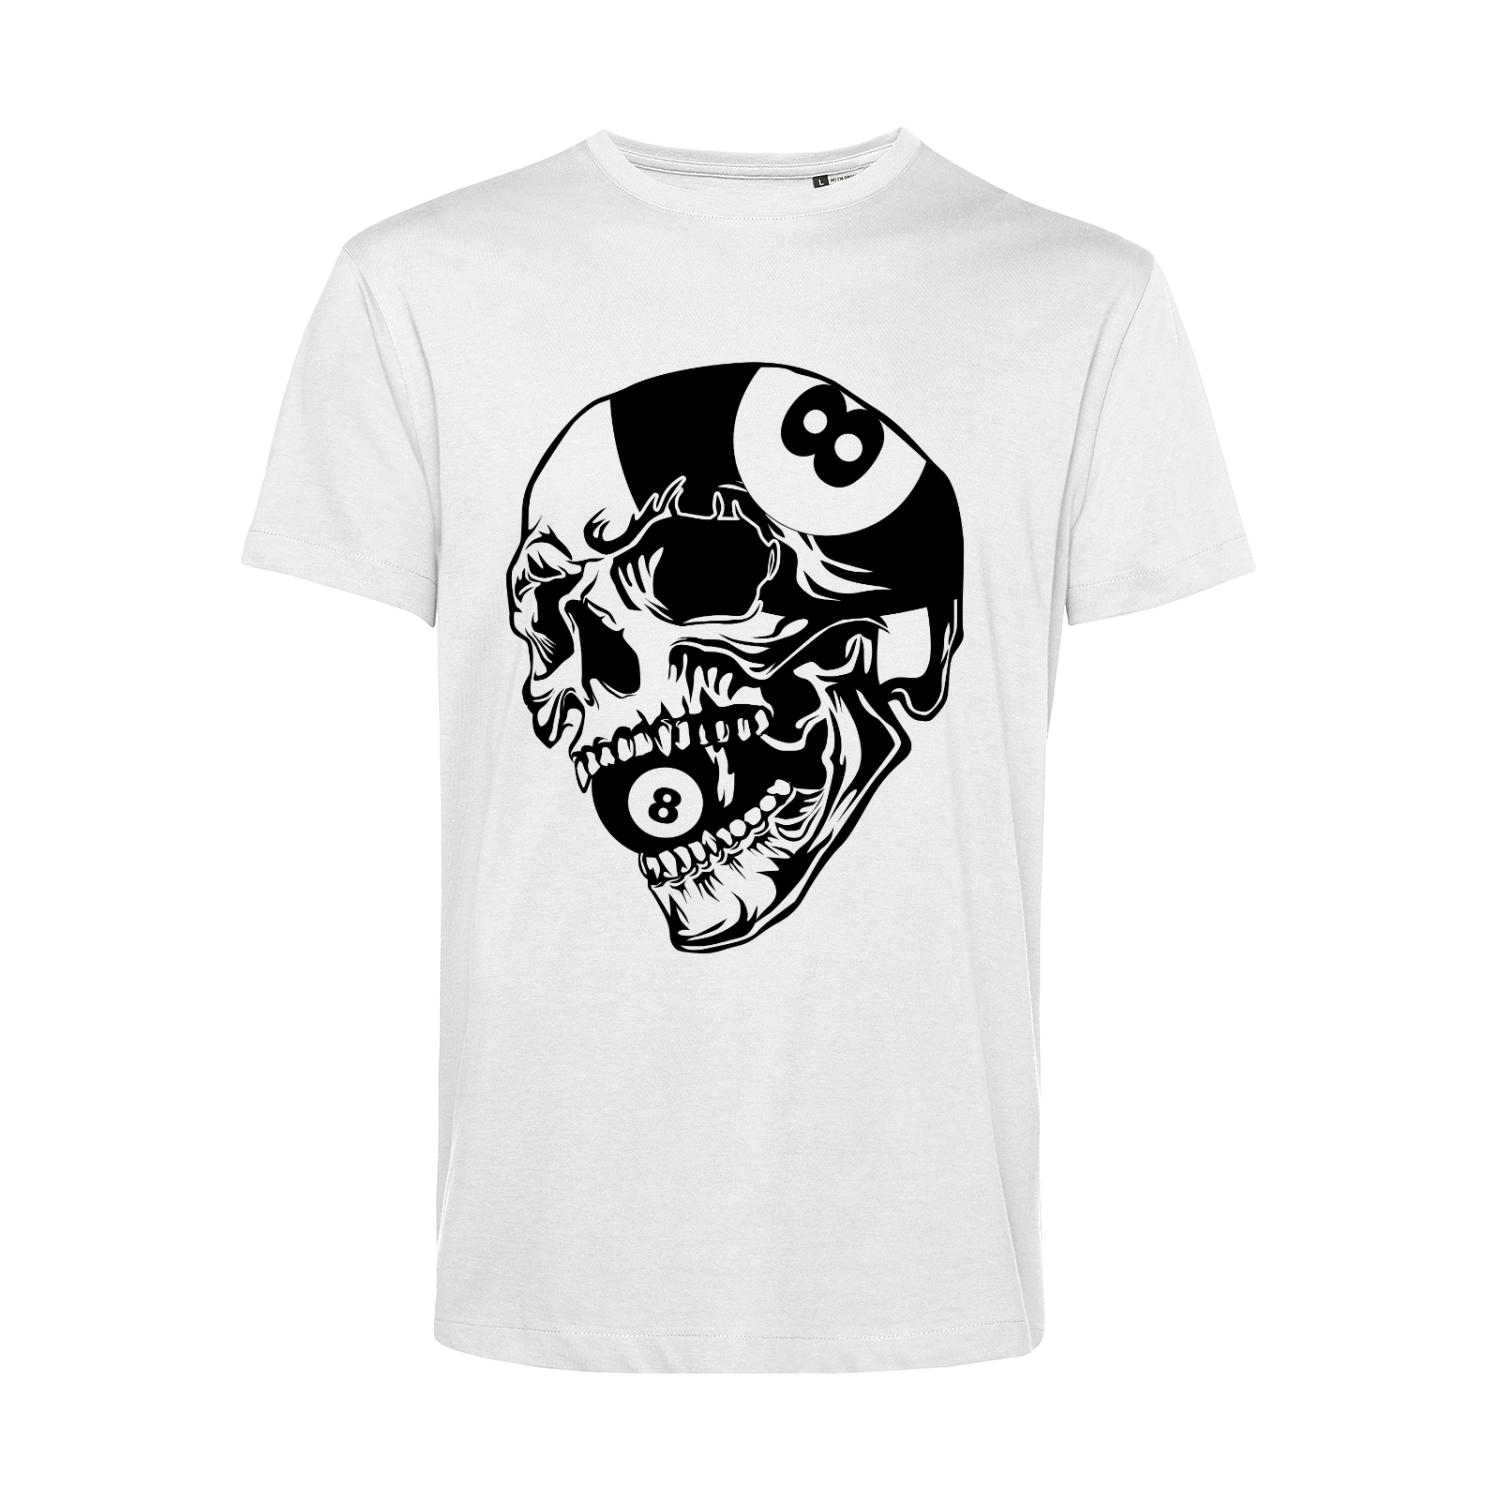 Nachhaltiges T-Shirt Herren Billard 8 Ball Totenkopf